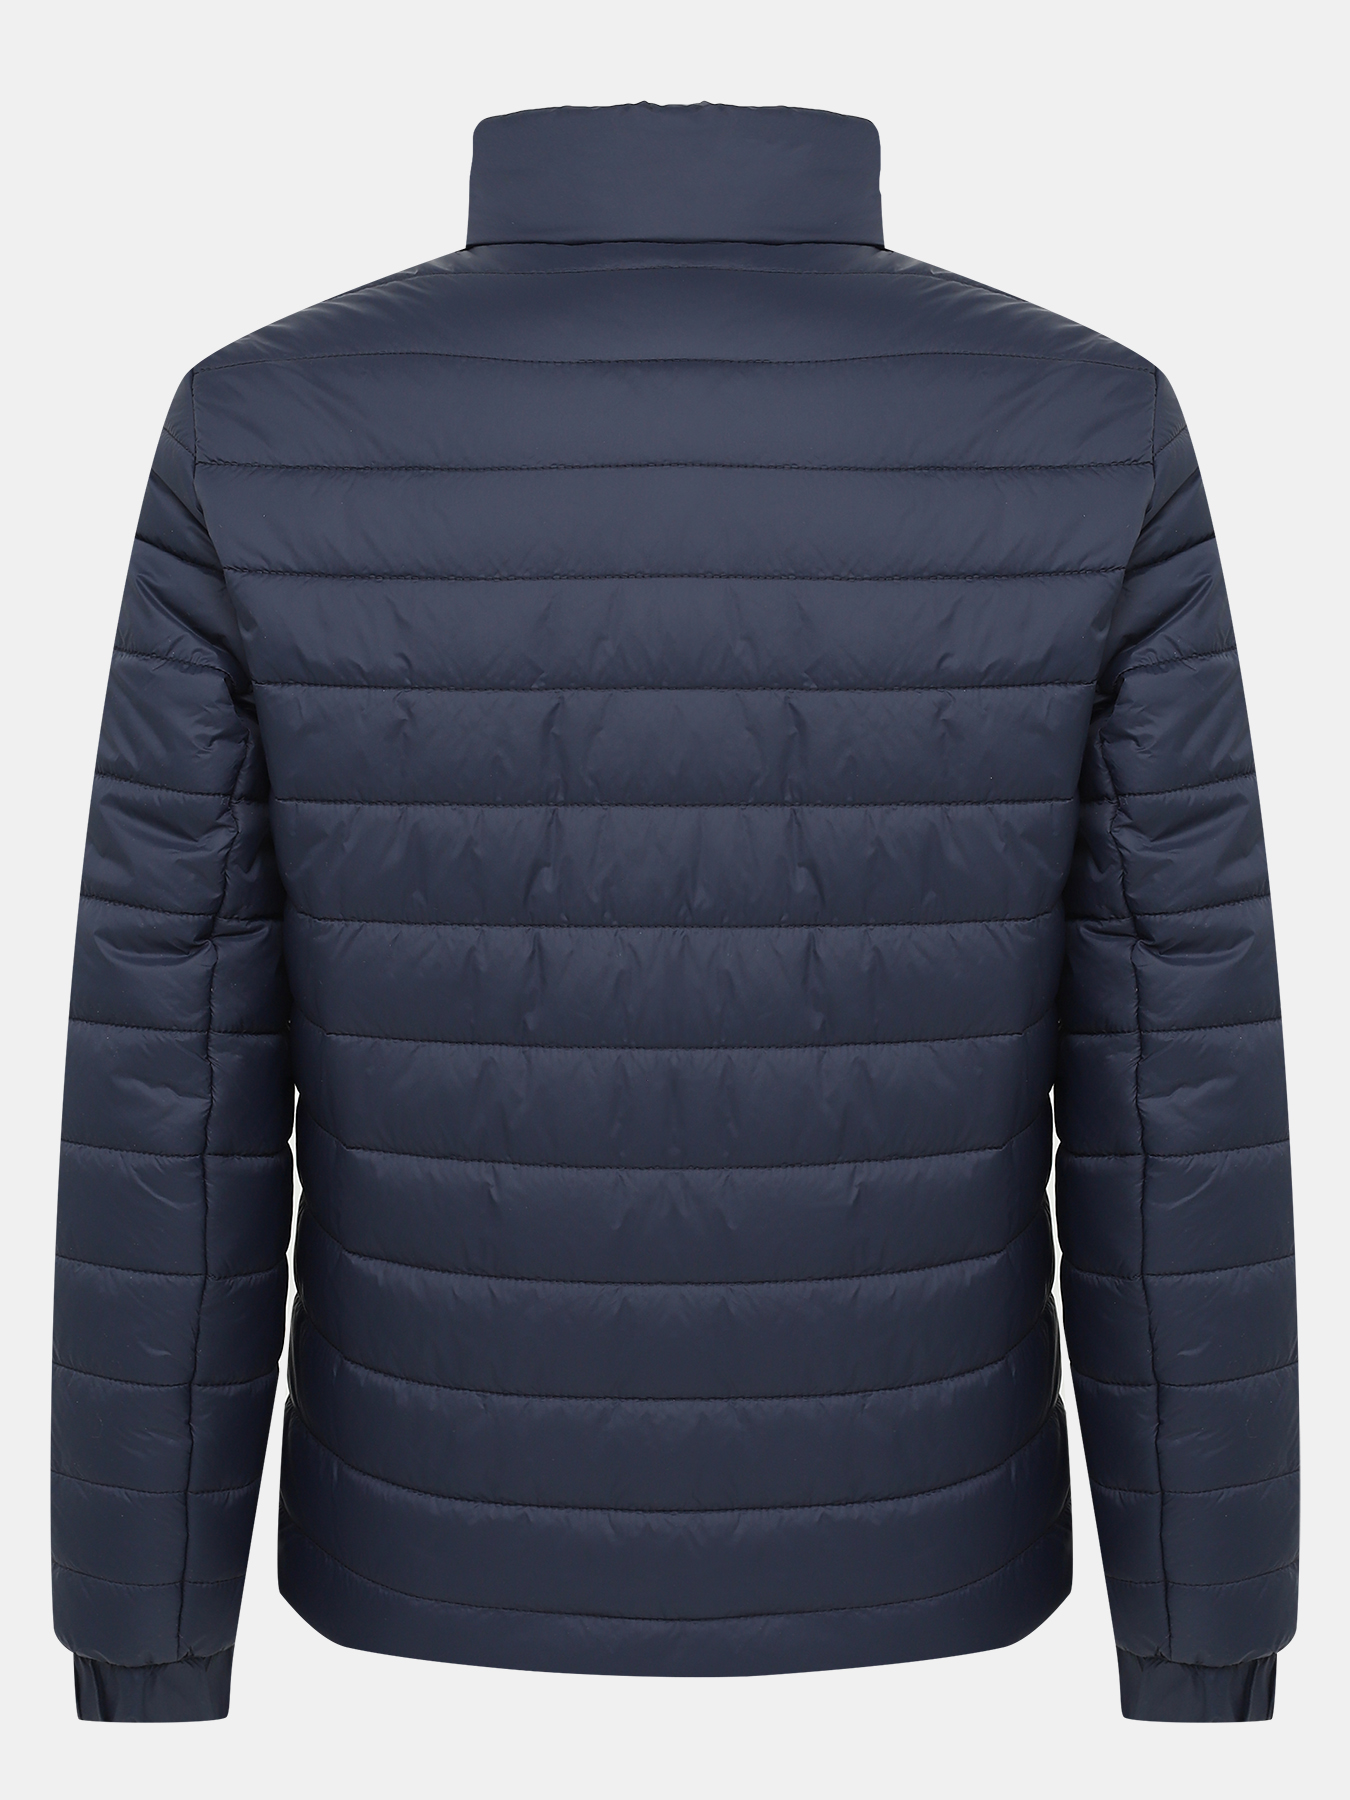 Куртка Benti HUGO 437018-042, цвет темно-синий, размер 46-48 - фото 5